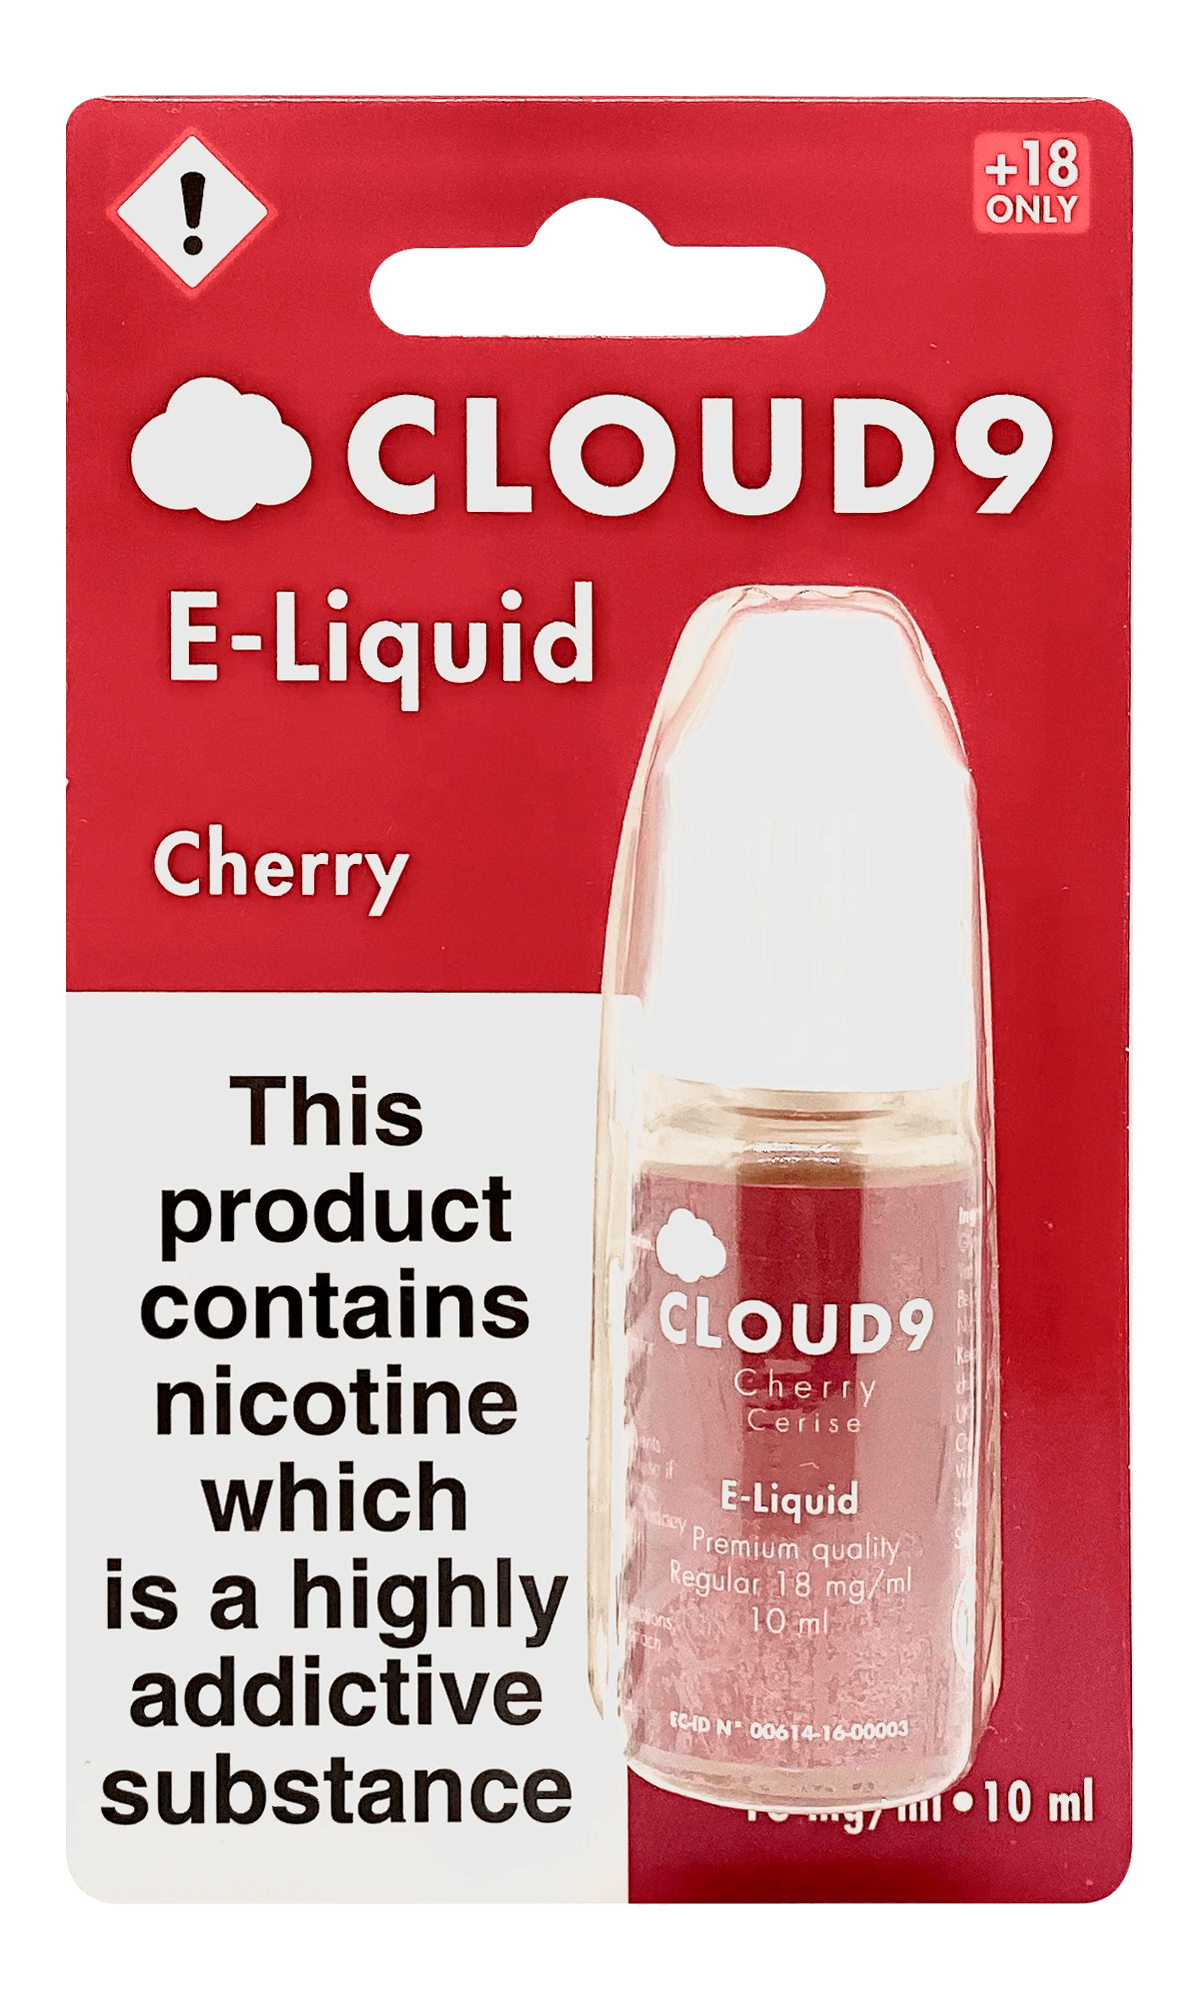 cherry cloud 9 e liquid product shot 1